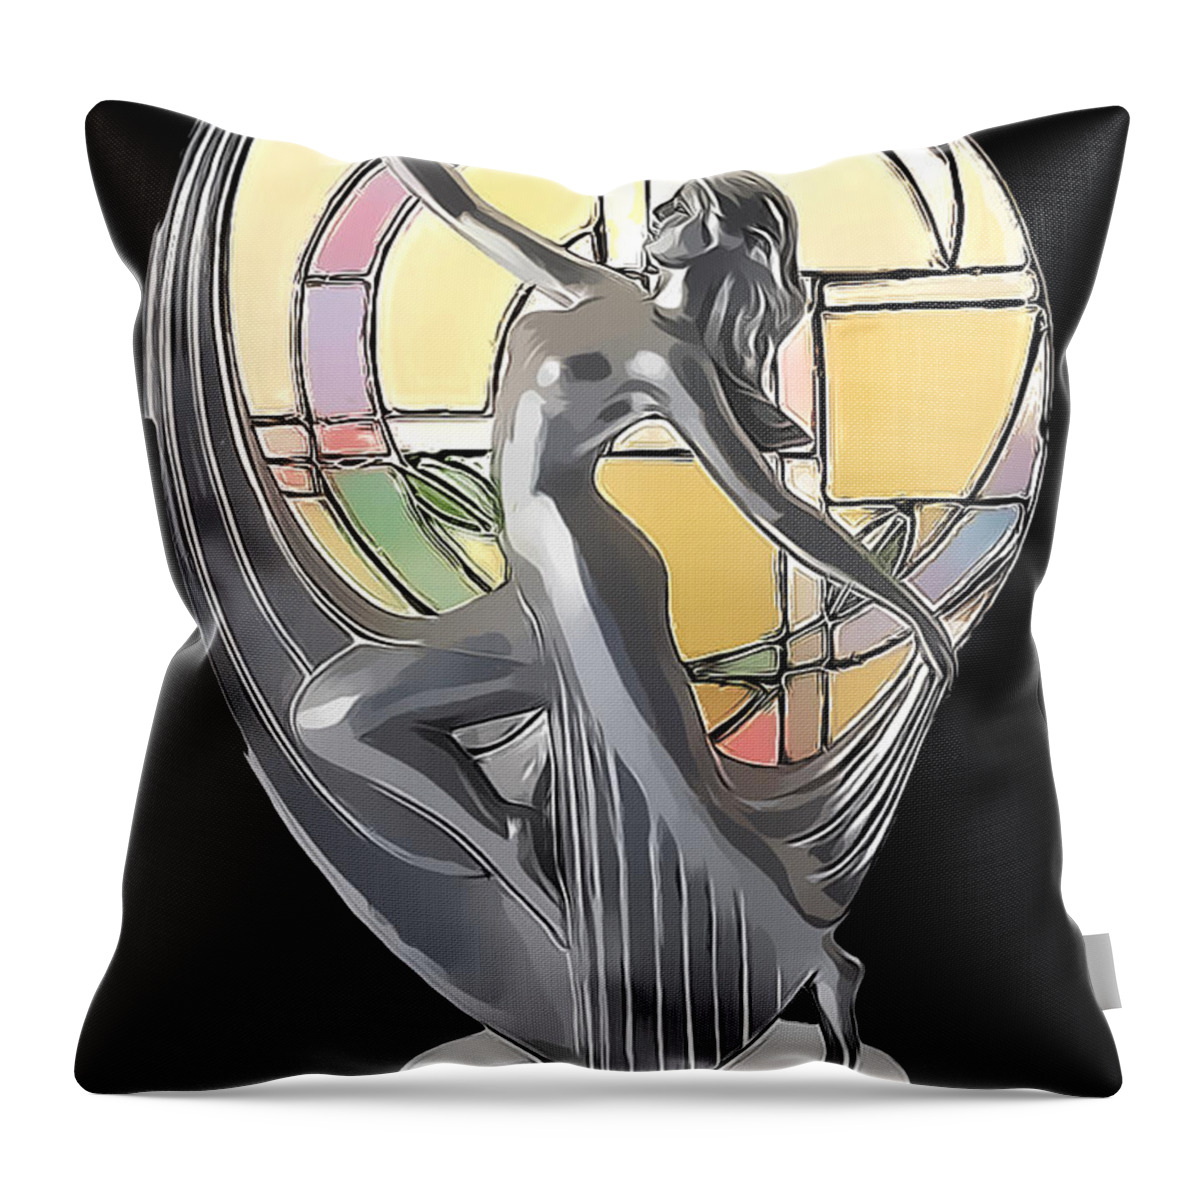 Art Deco Lamp Throw Pillow featuring the digital art Art Deco Lamp Artwork by Chuck Staley